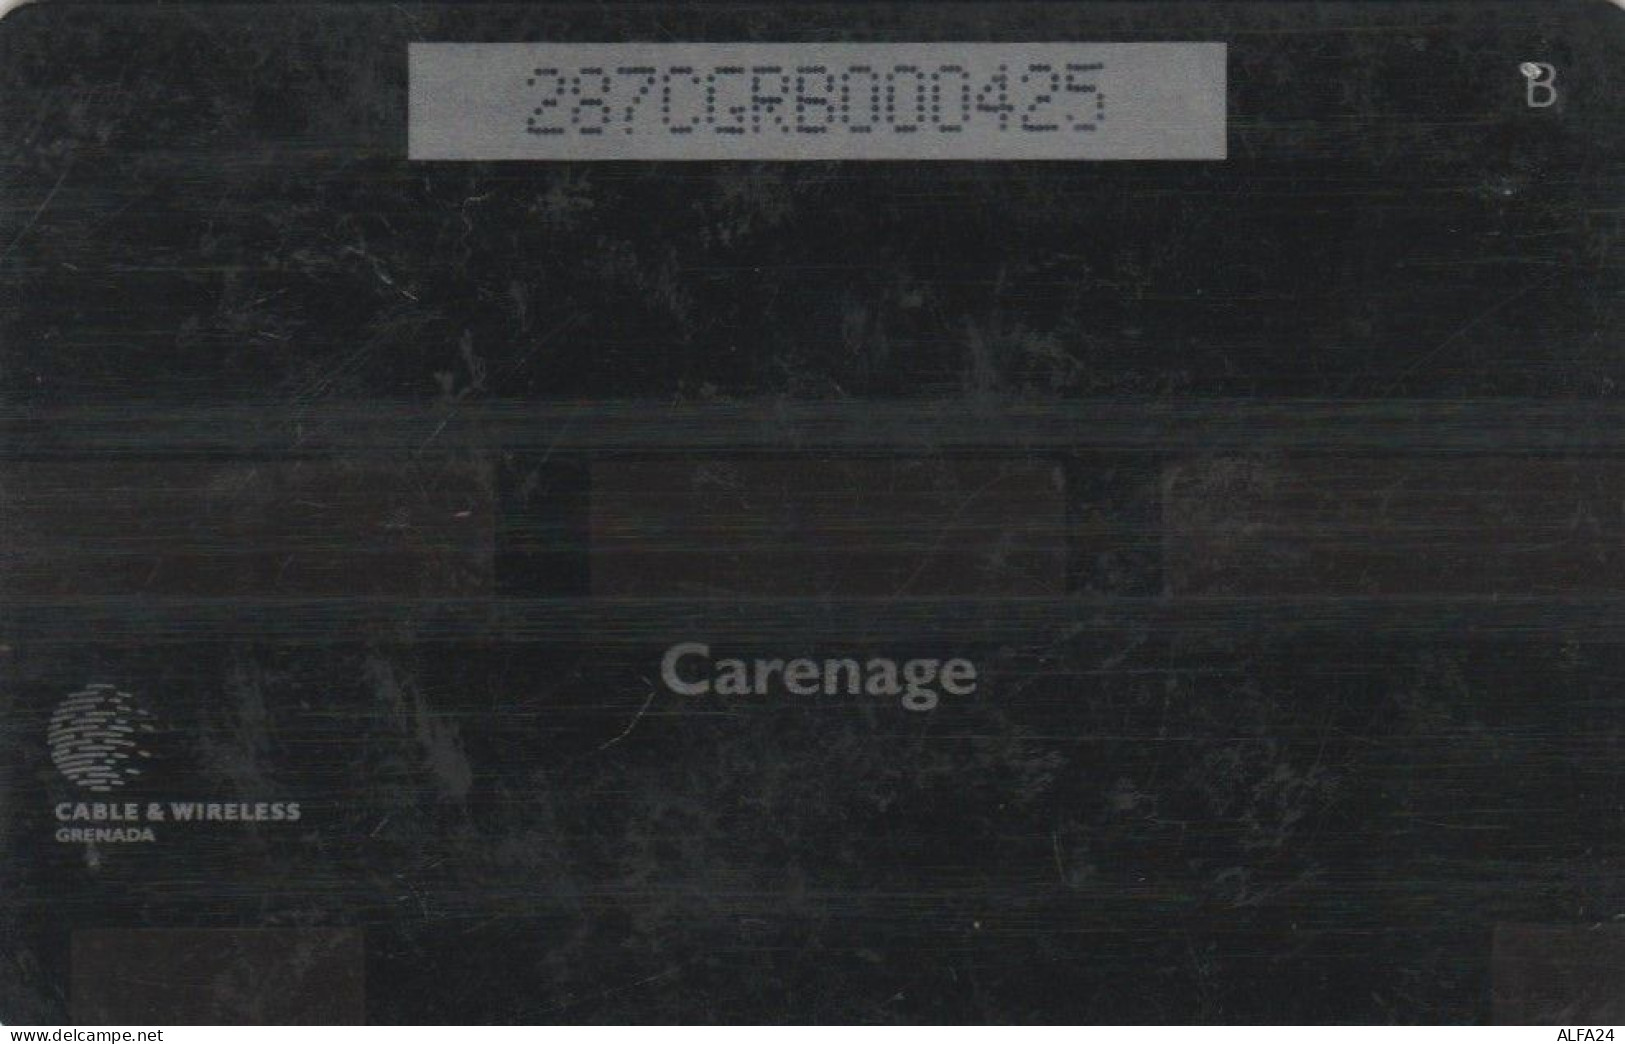 PHONE CARD GRENADA  (E97.17.6 - Grenade